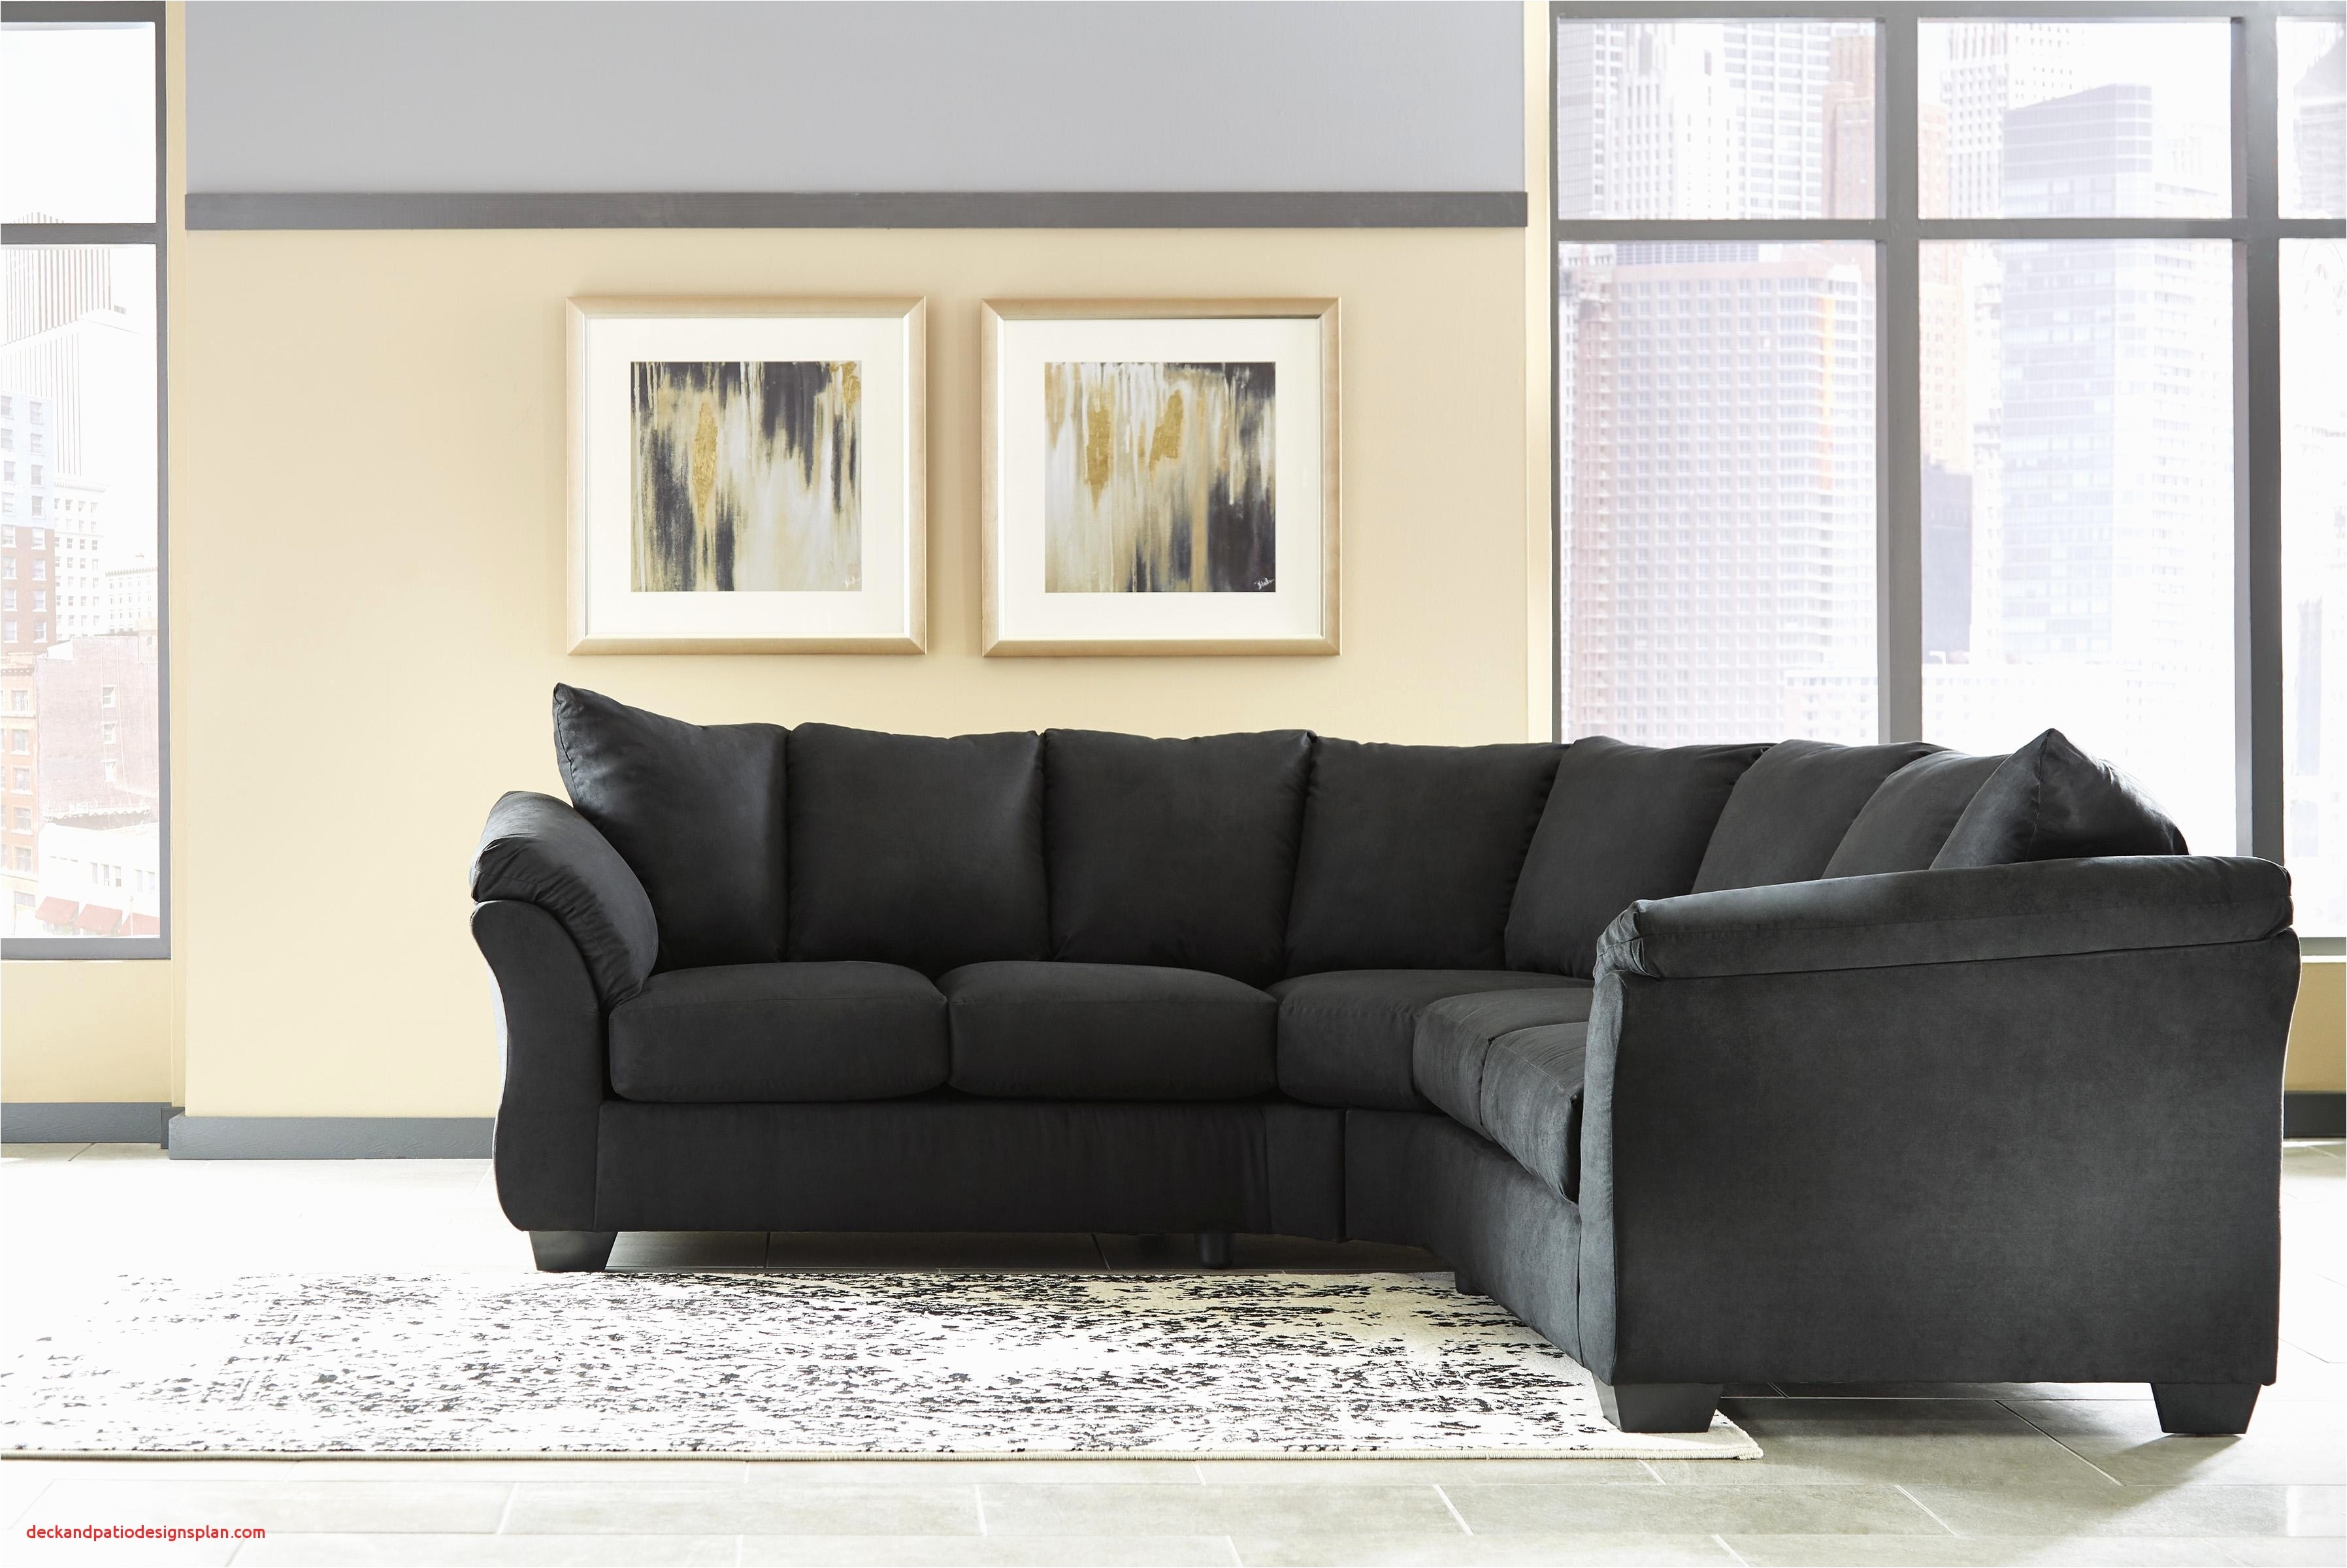 Macys Leather Chair White sofa Chair Luxury Gunstiges sofa sofa Big Gunstige sofa Macys